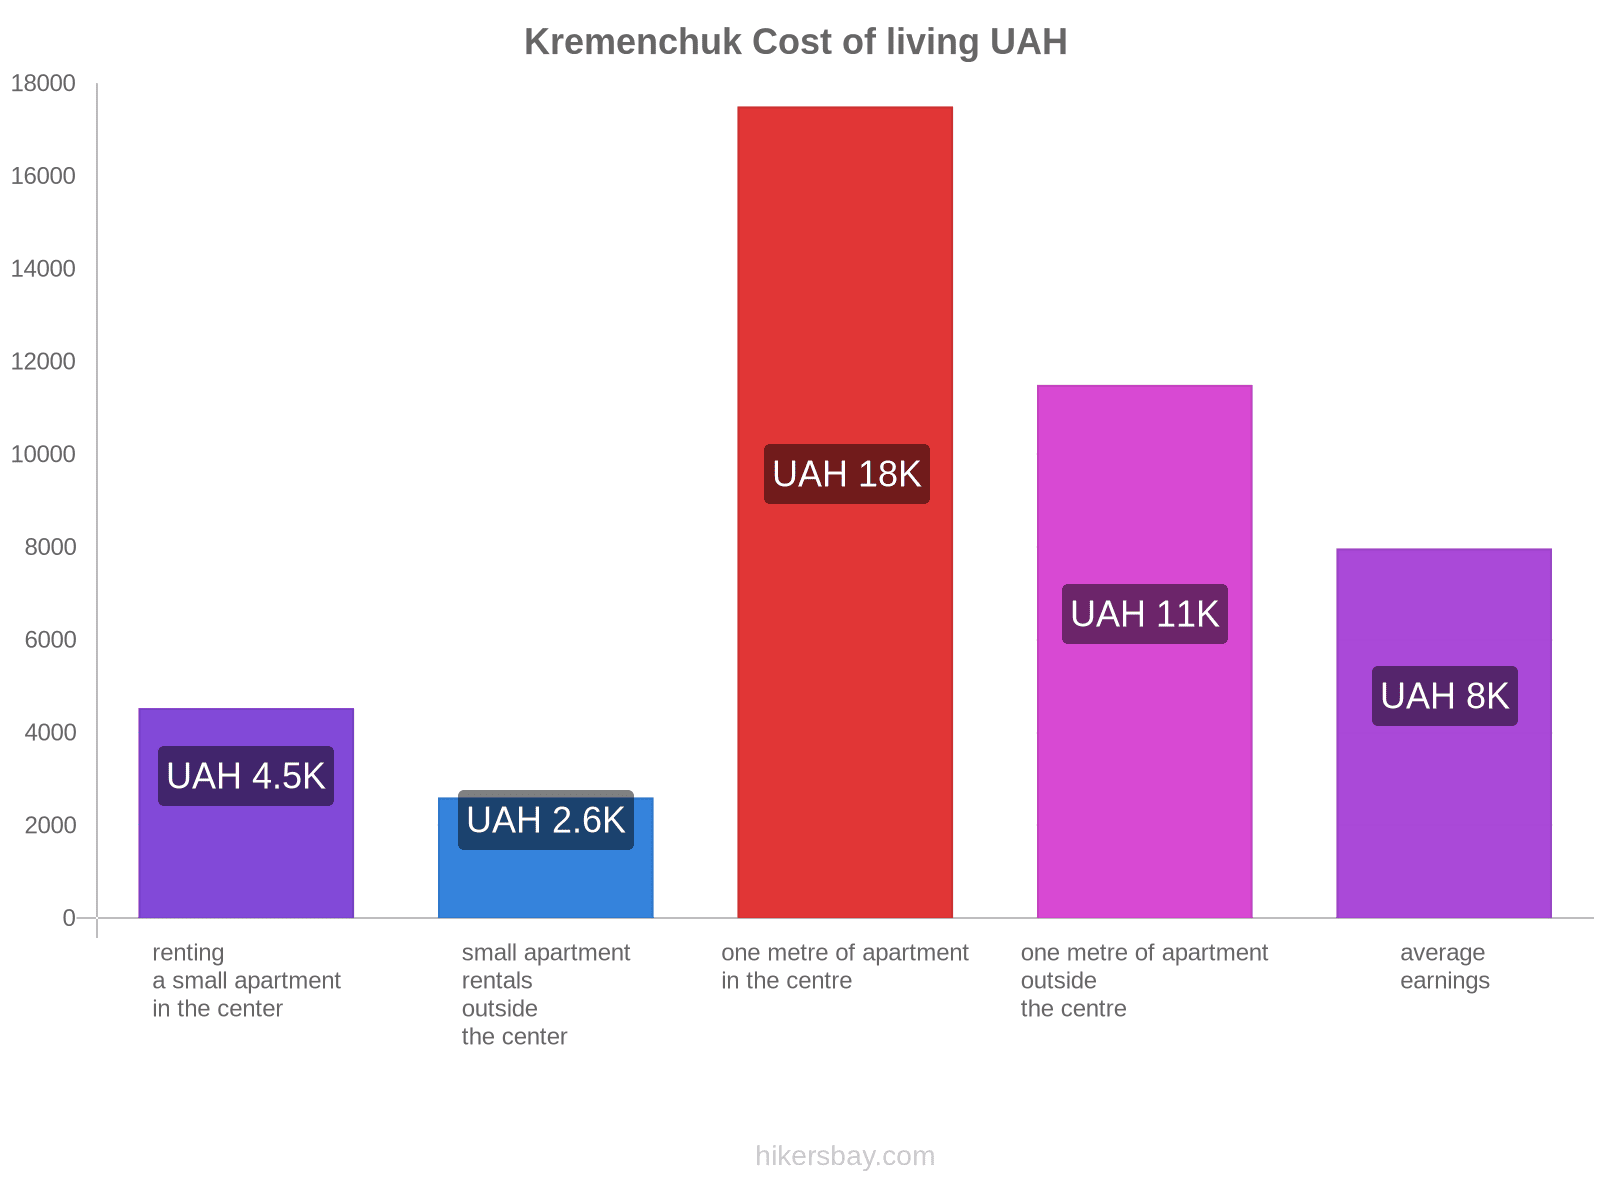 Kremenchuk cost of living hikersbay.com